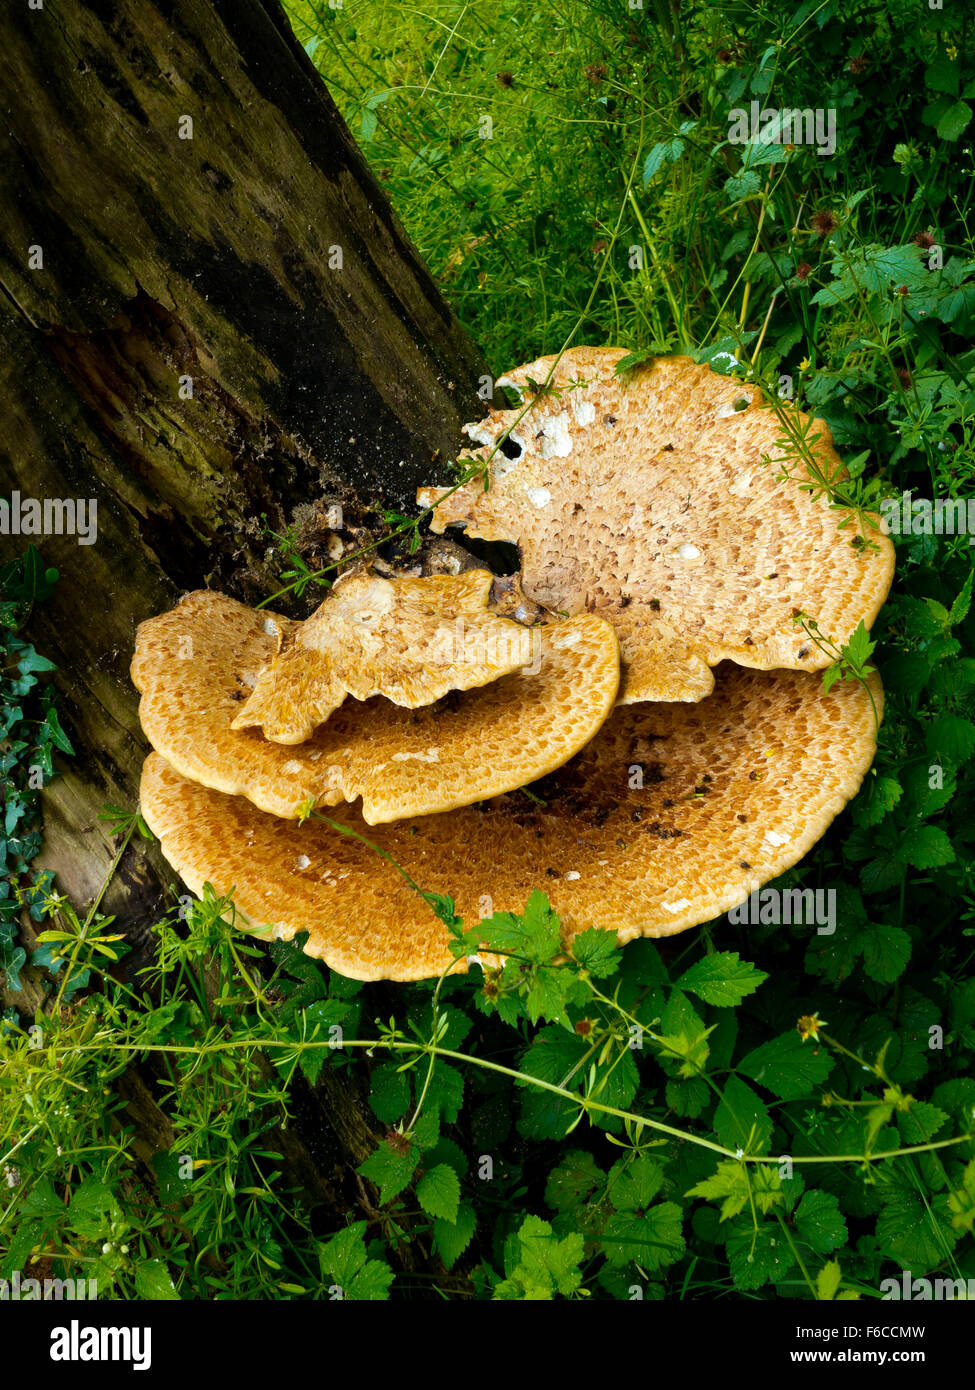 Bracket fungus or shelf fungus phylum Basidiomycota growing on a tree in woodland in England UK Stock Photo